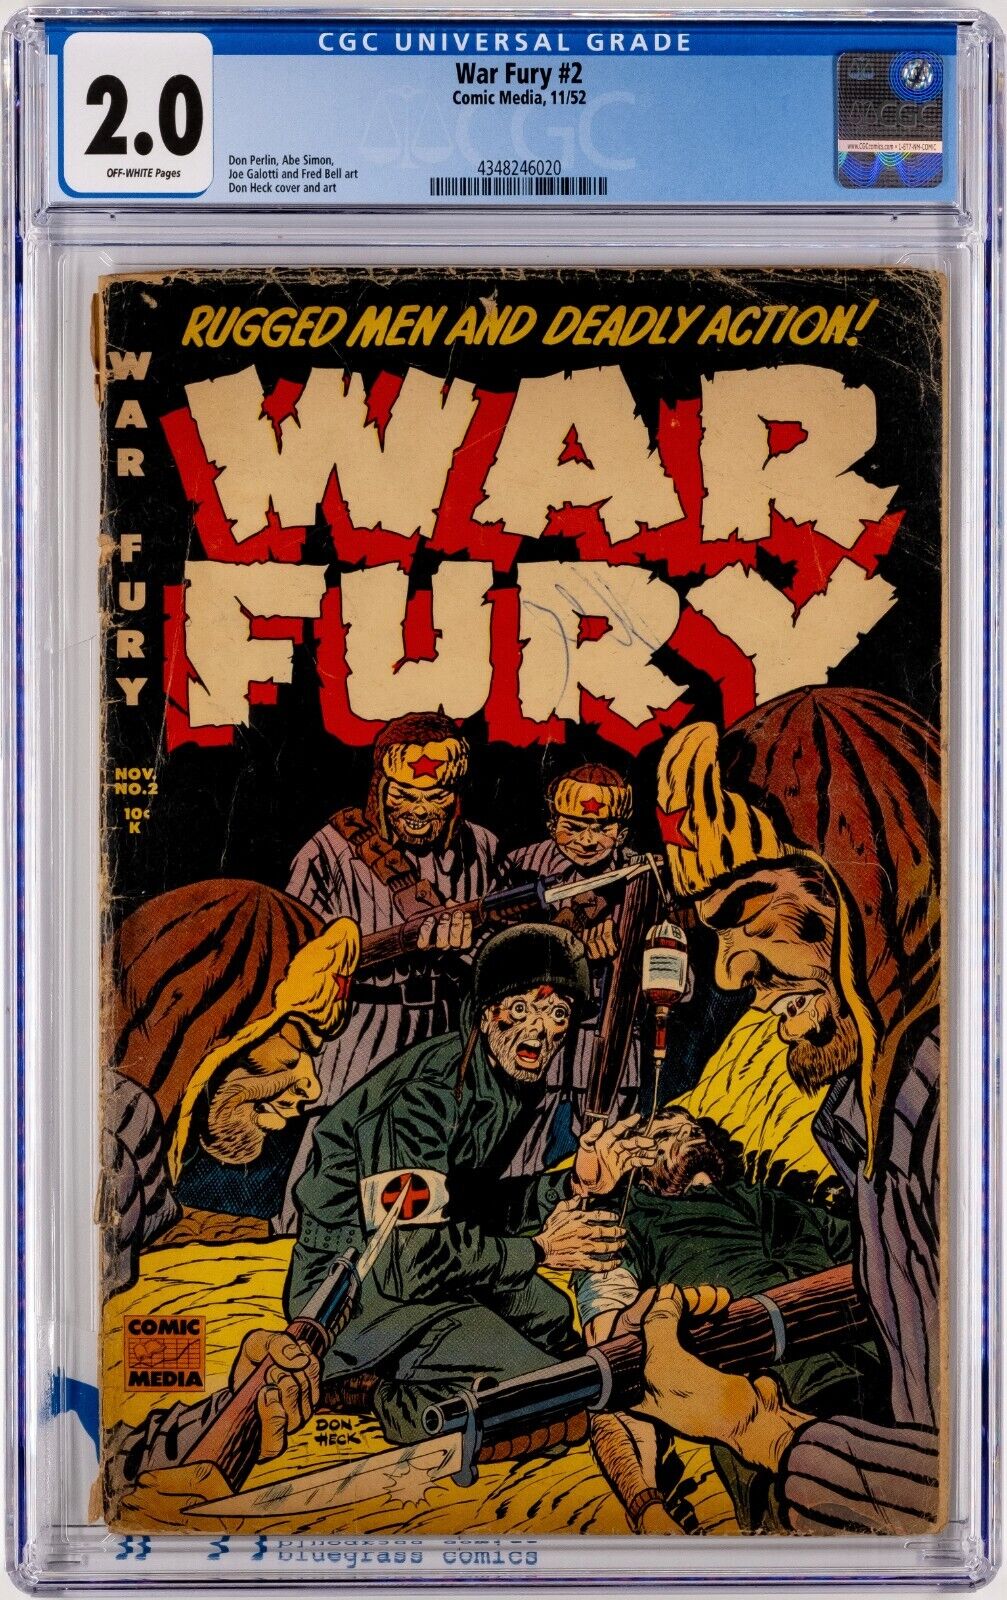 War Fury #2 (1952) - Pre-Code Banned War Horror Comic - CGC 2.0